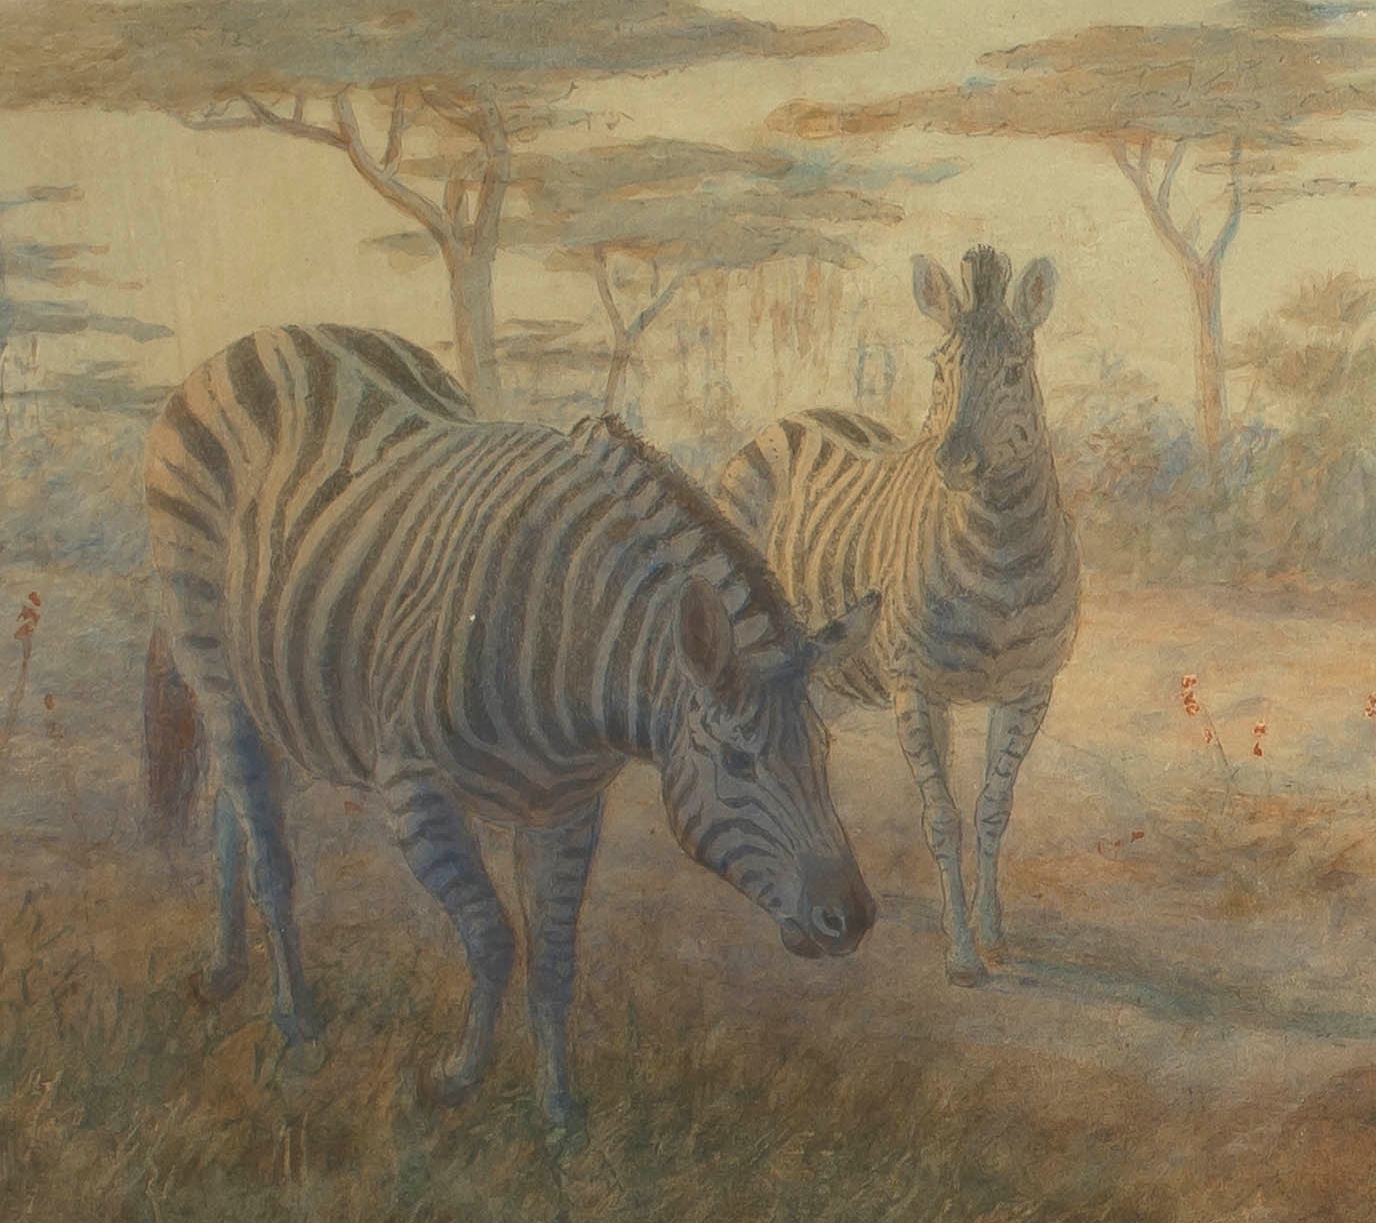 Joseph Wolf; The Greater Kudu and Zebra